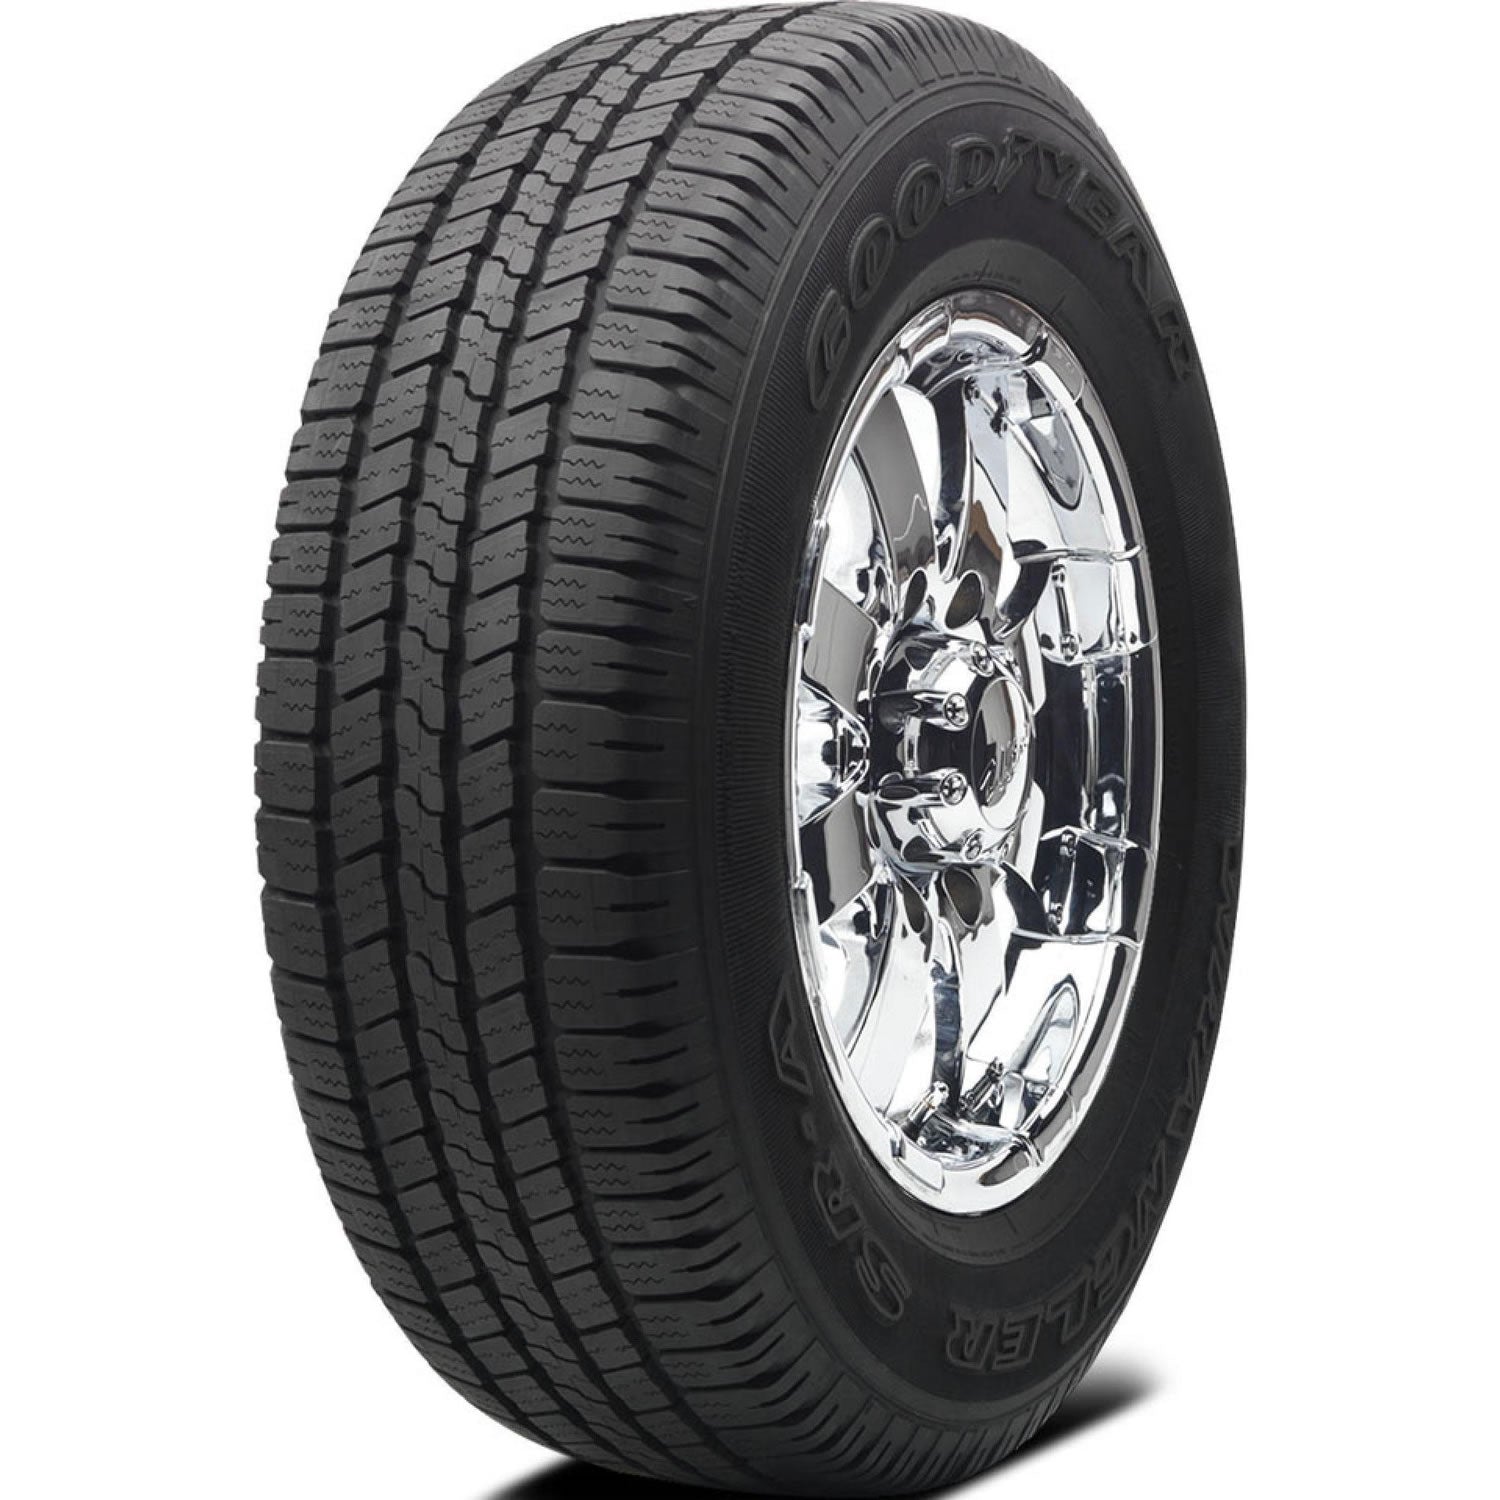 GOODYEAR WRANGLER SR-A P255/70R16 (30.1X10.2R 16) Tires